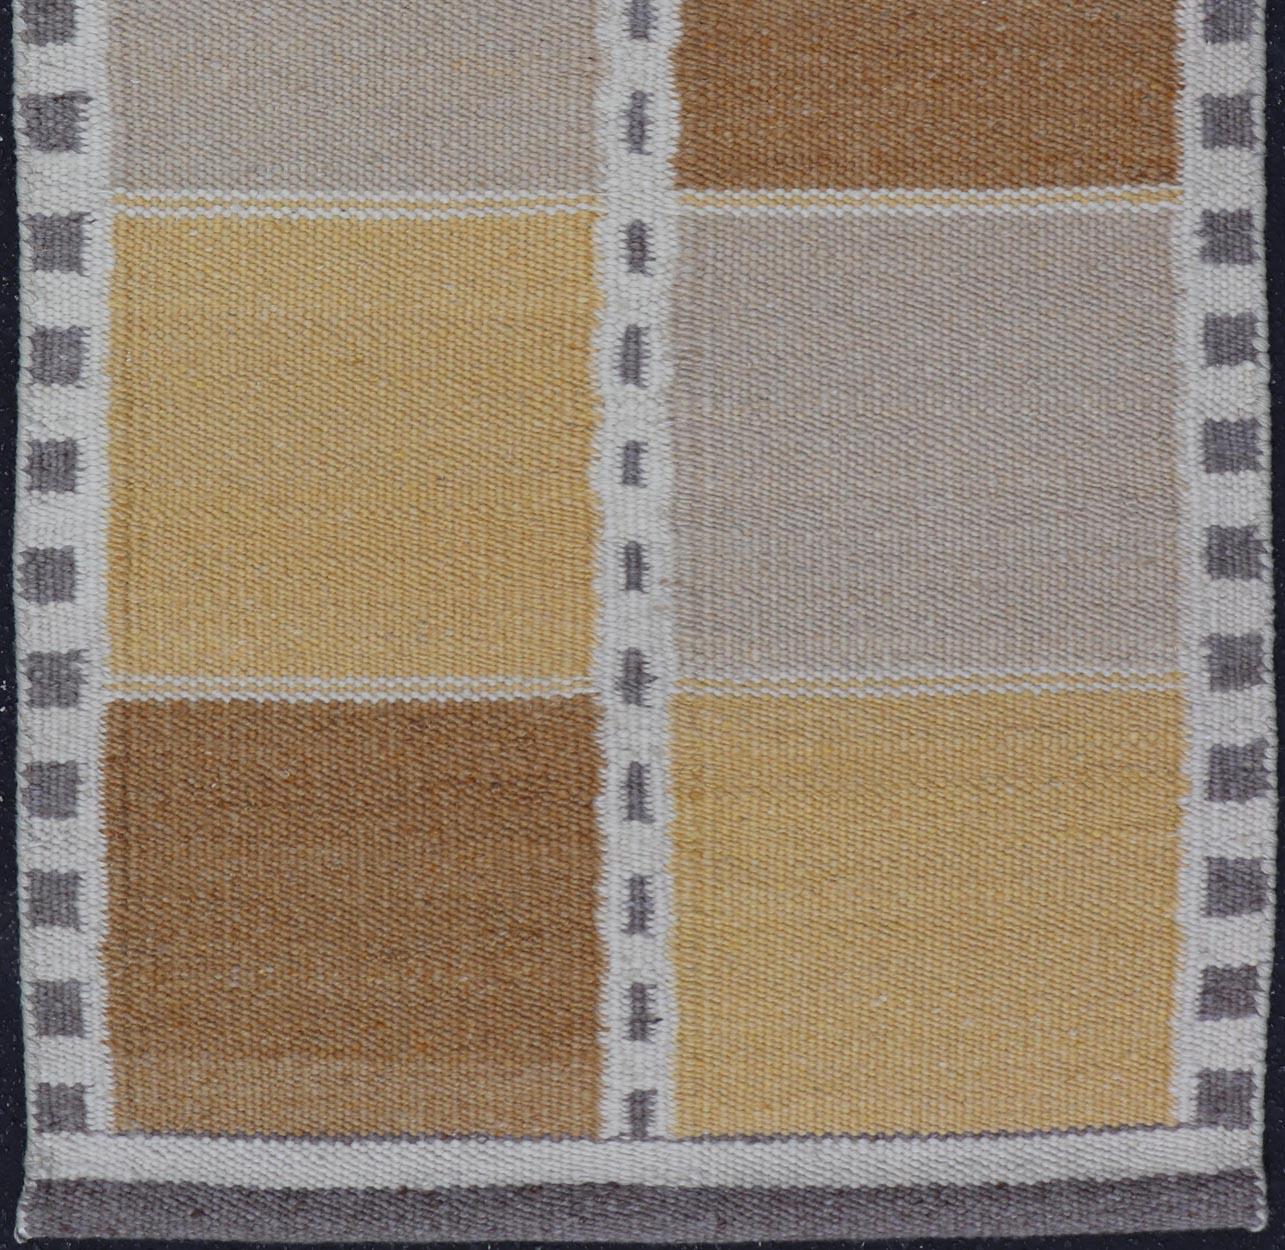 Contemporary Scandinavian Flat Weave Rug in Modern Swedish Design Yellow. Keivan Woven Arts rug # RJK-24157-SHB-020-NU, Scandinavian flat weave. 21st Century Modern Kilim. 
Measures: 2'11 x 5'1 
This Scandinavian/Swedish flat-weave is inspired by